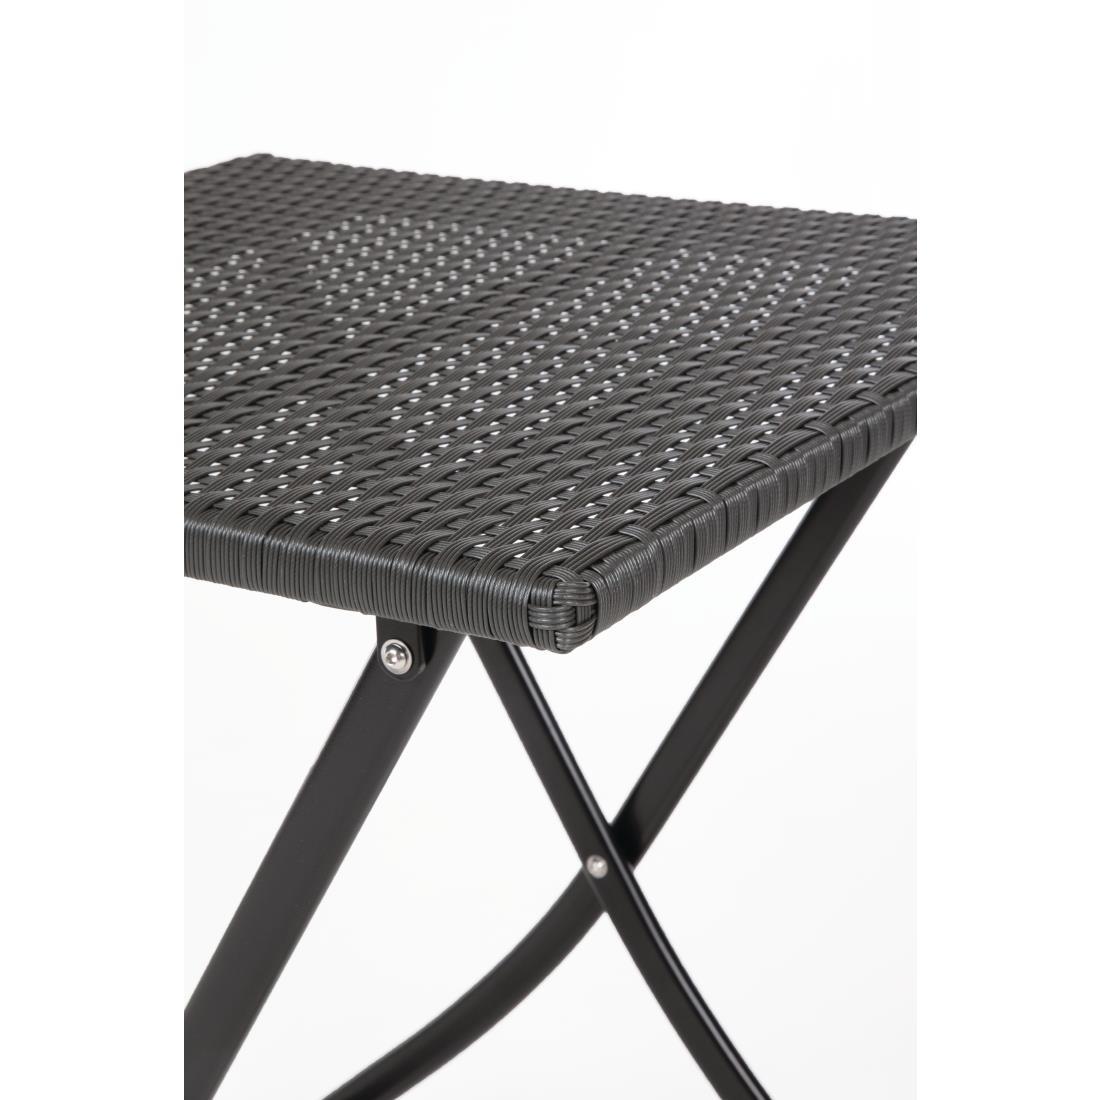 Bolero Square PE Wicker Folding Table Black 600mm - GL302  - 5